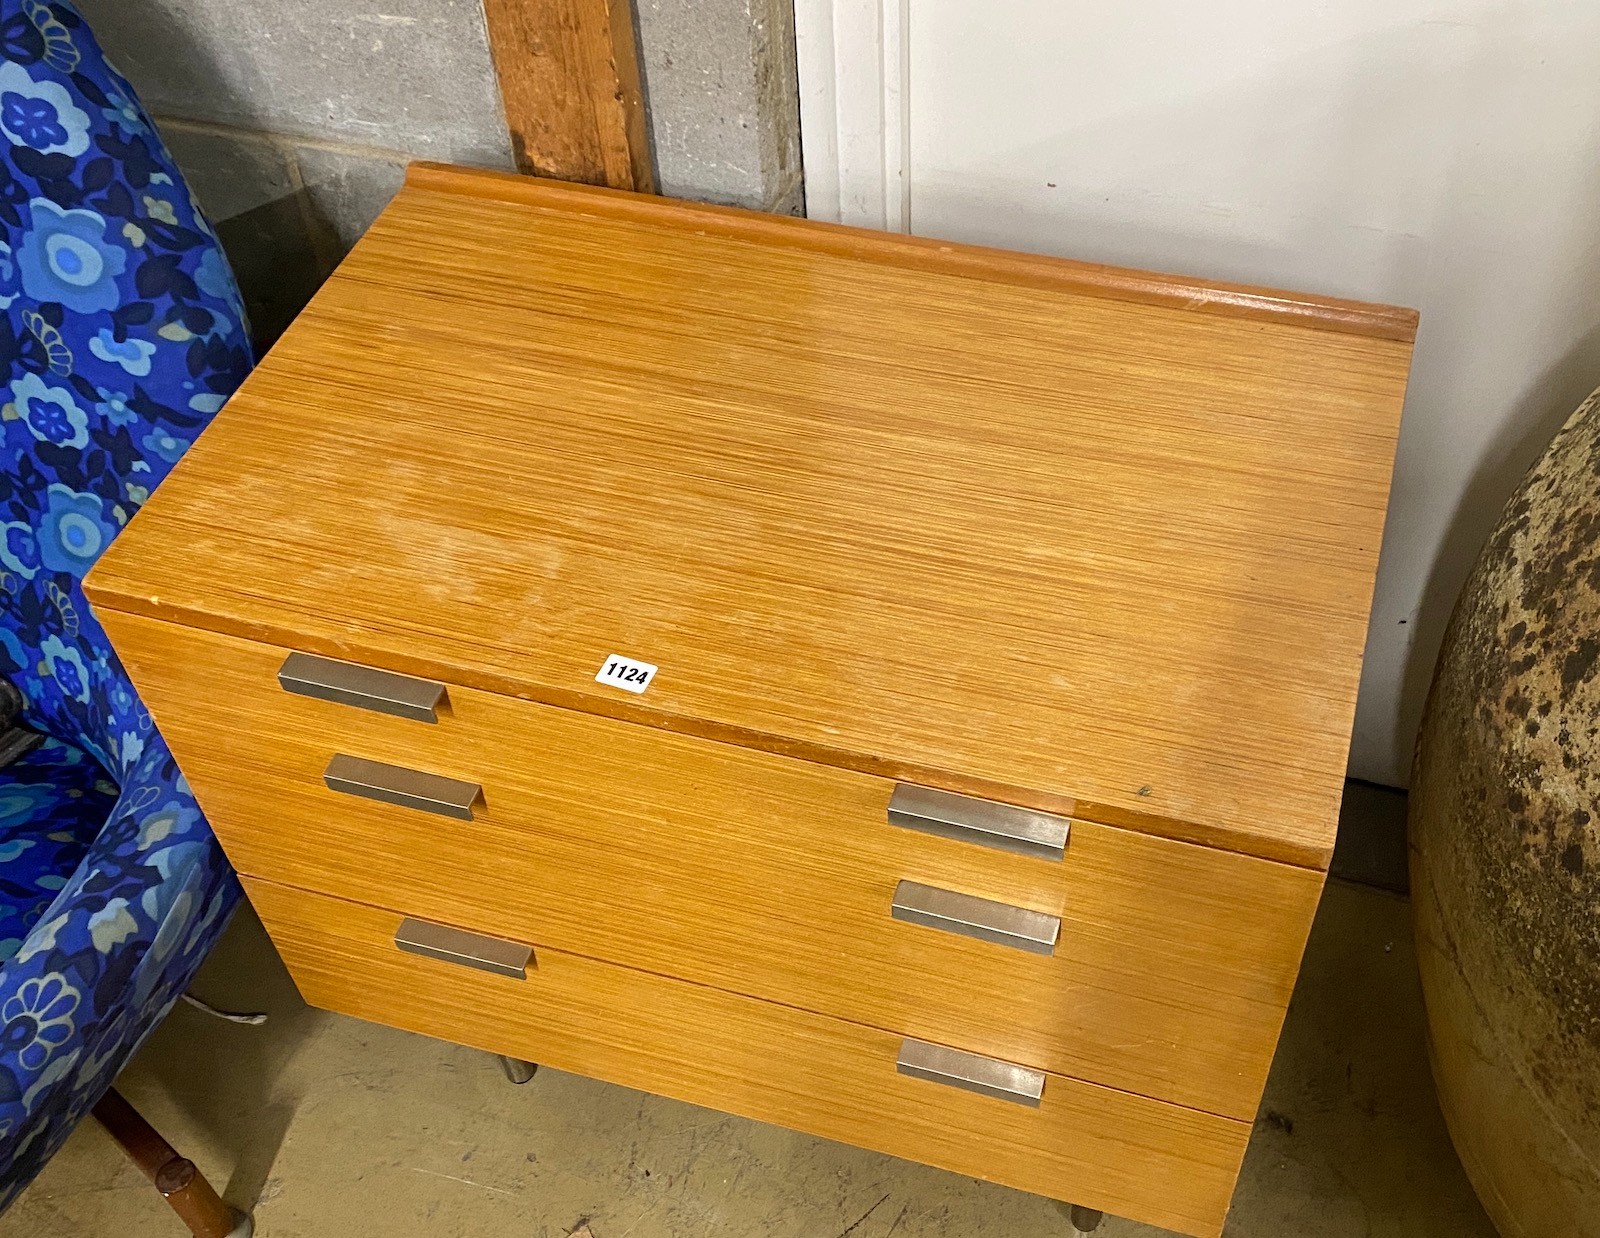 A Stag Fine Line three drawer chest width 76cm, depth 46cm, height 73cm